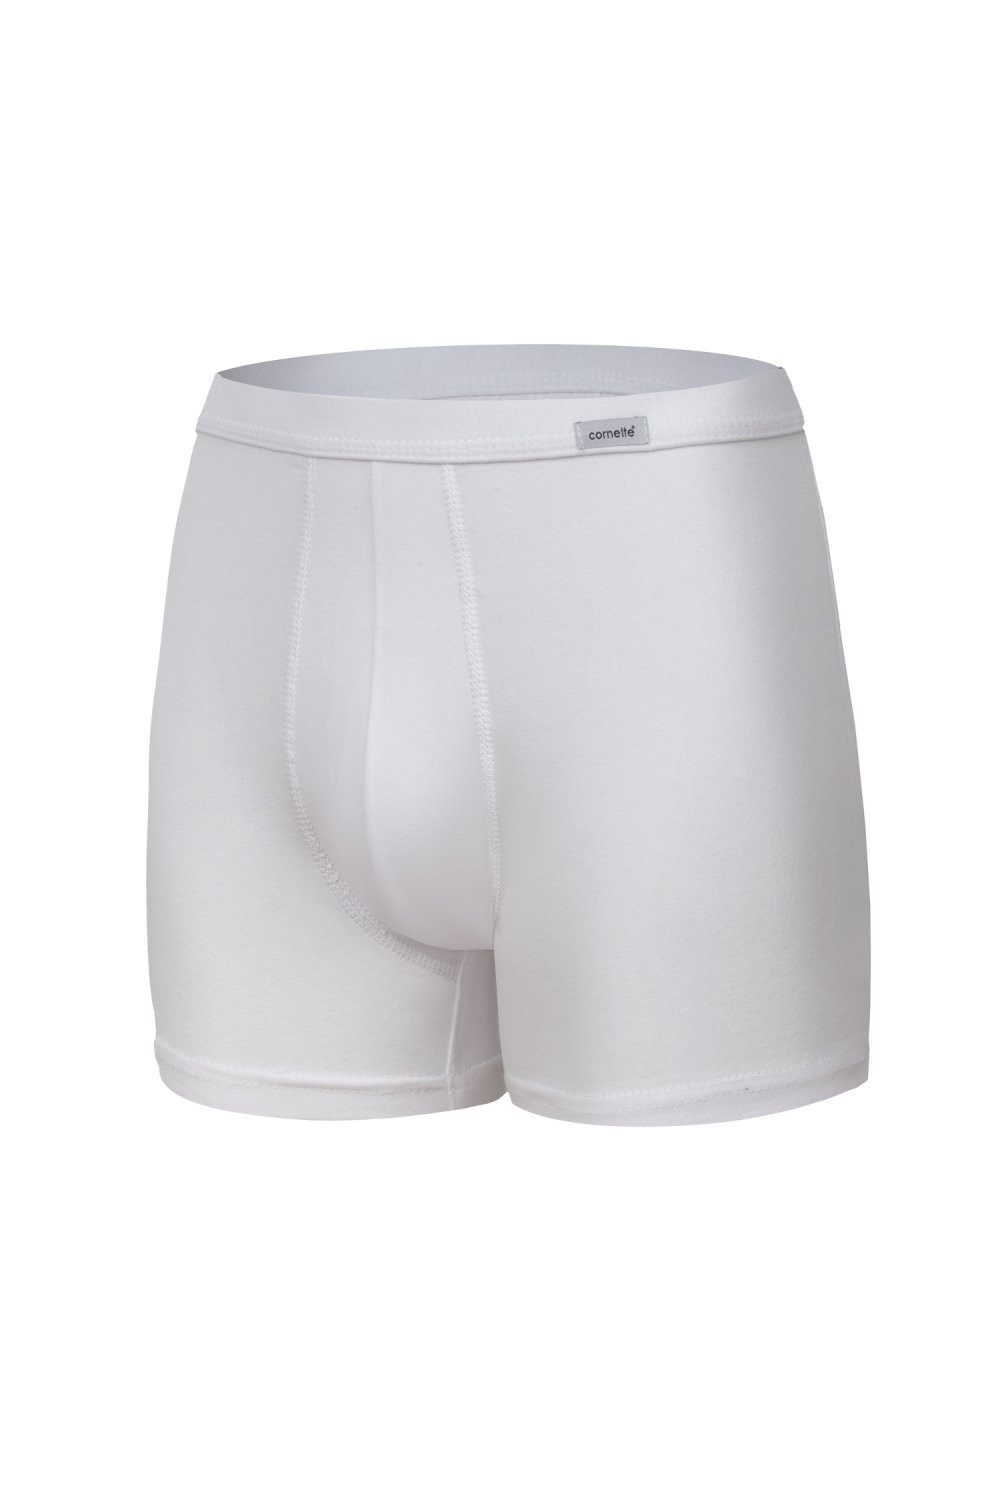 Pánské boxerky 092 Authentic plus white - CORNETTE Bílá 4XL